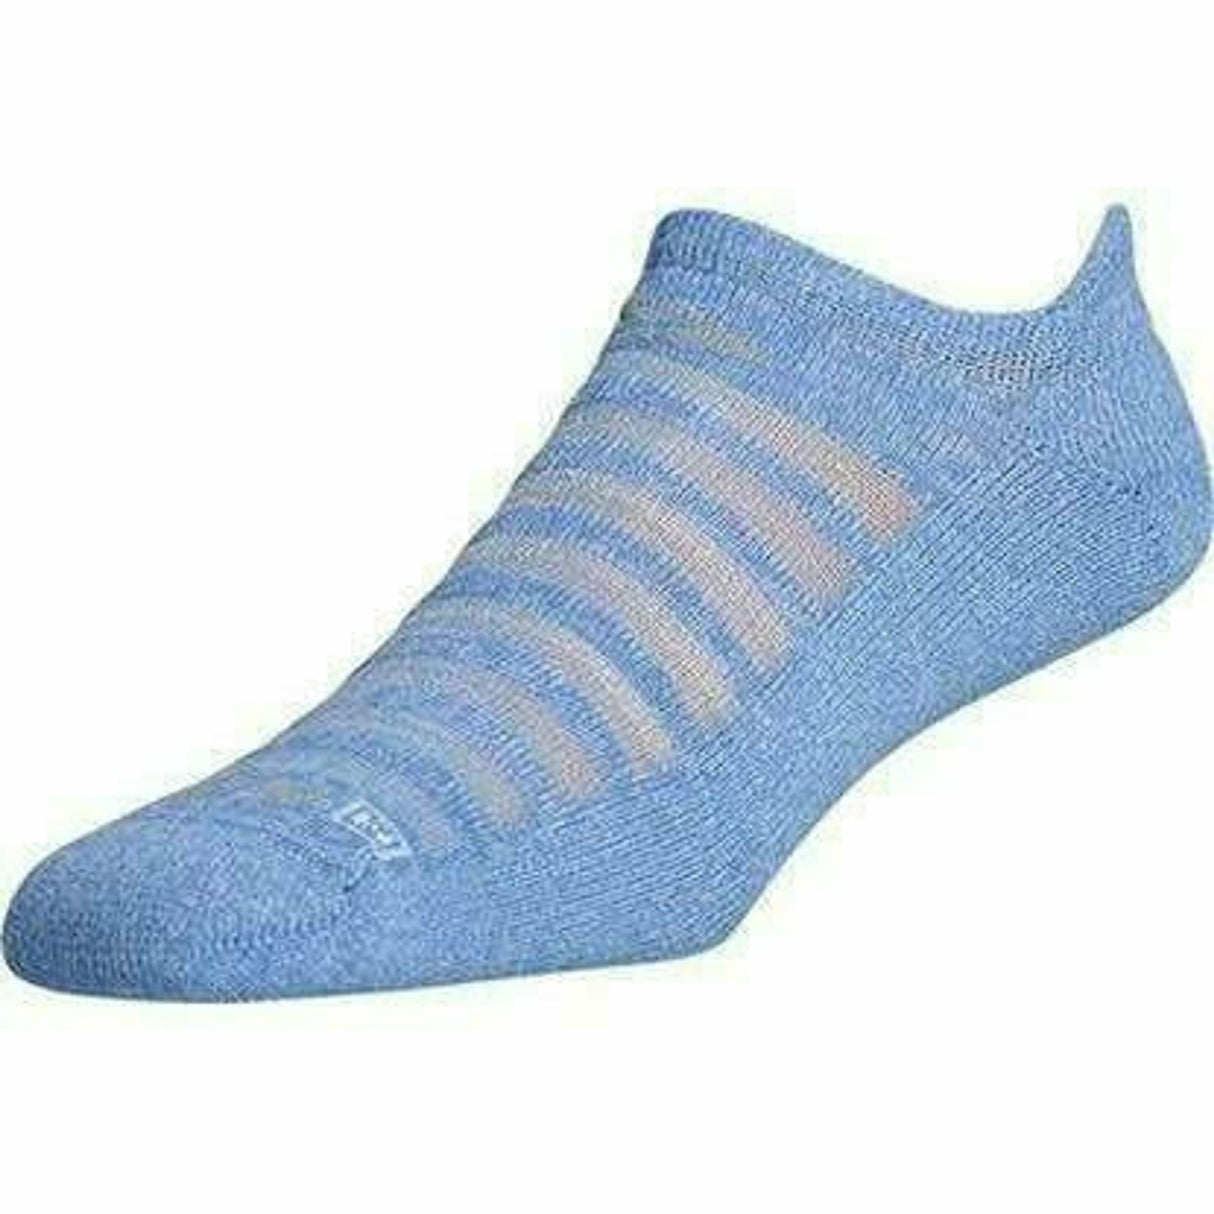 Drymax Running Light-Mesh No Show Tab Socks  -  X-Large / Sky Blue Heathered